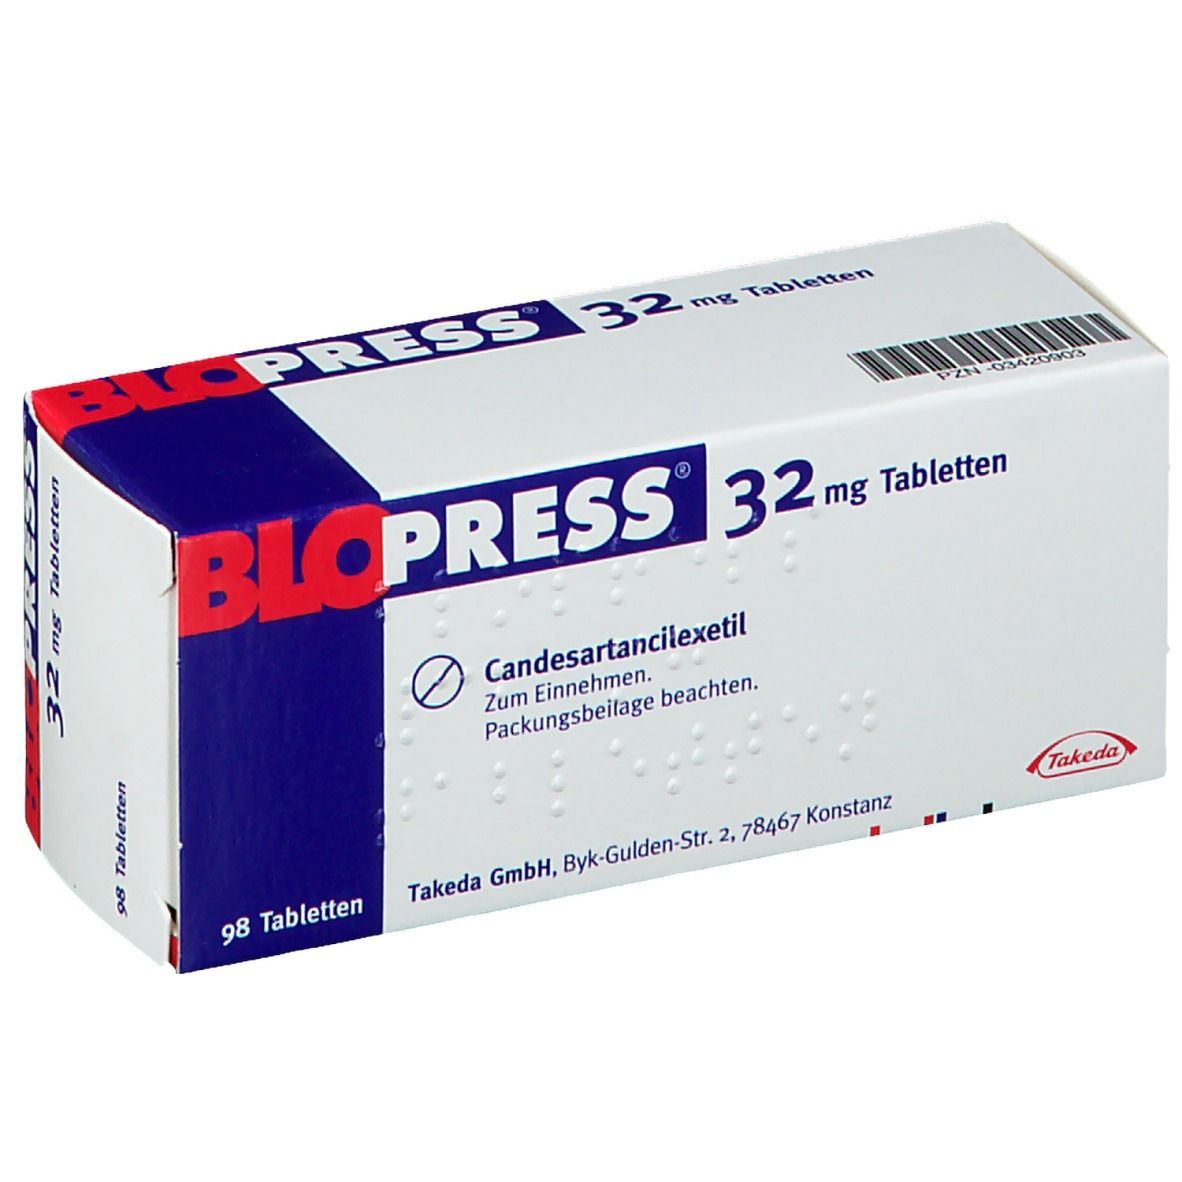 Blopress® 32 mg